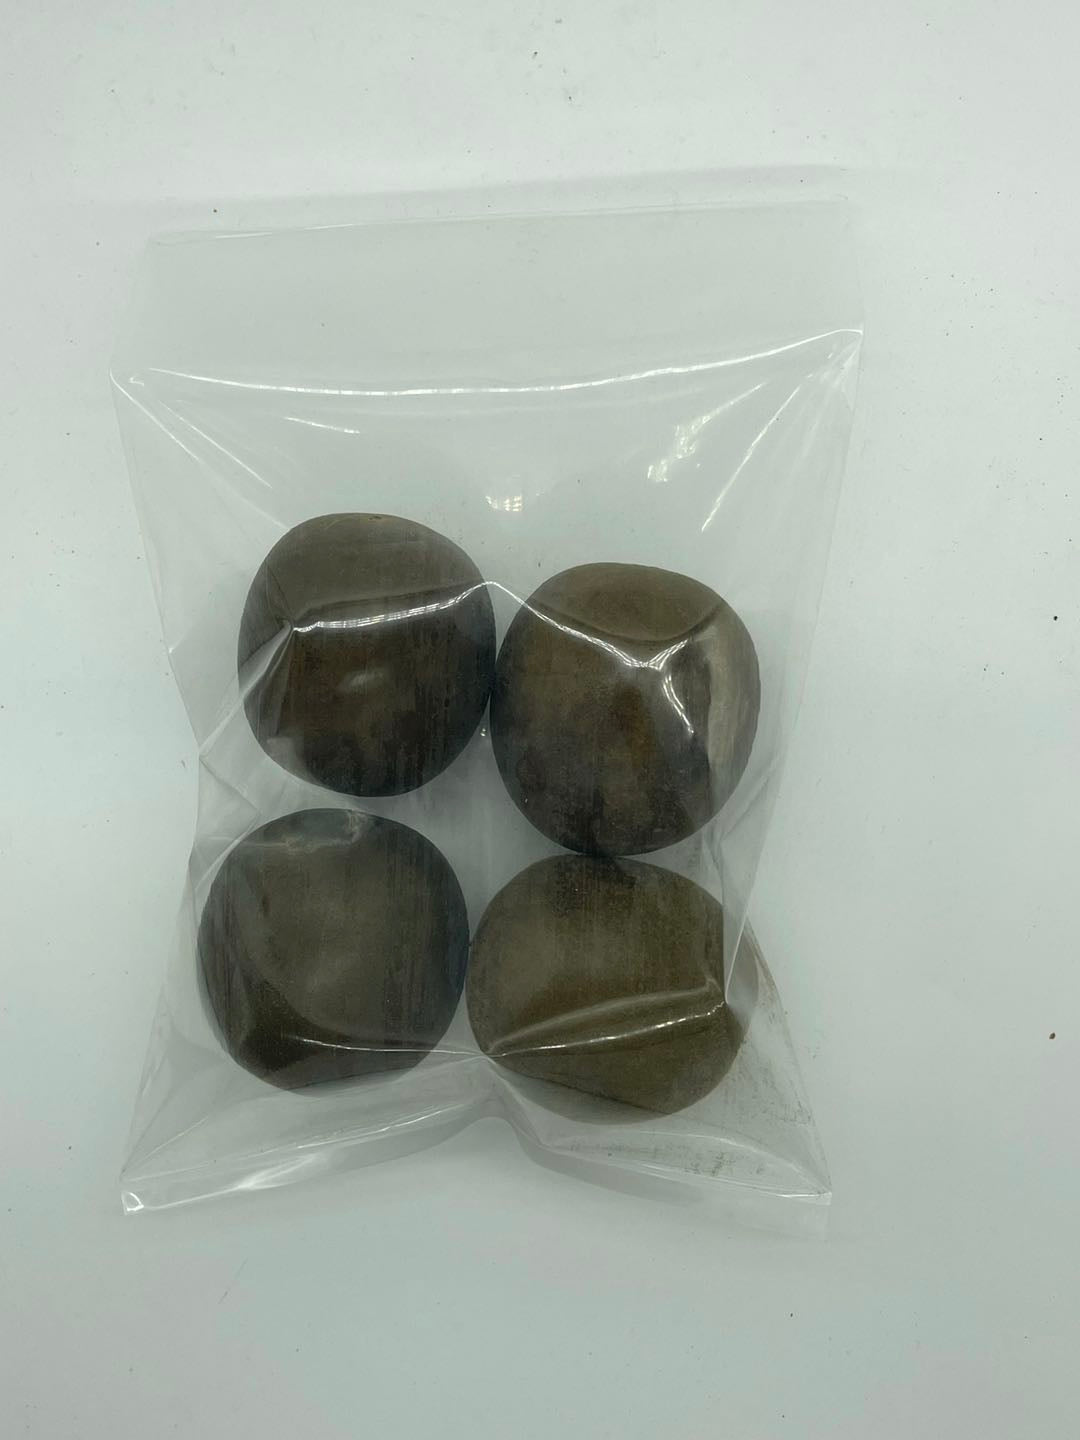 Dried Monk Fruit | 罗汉果